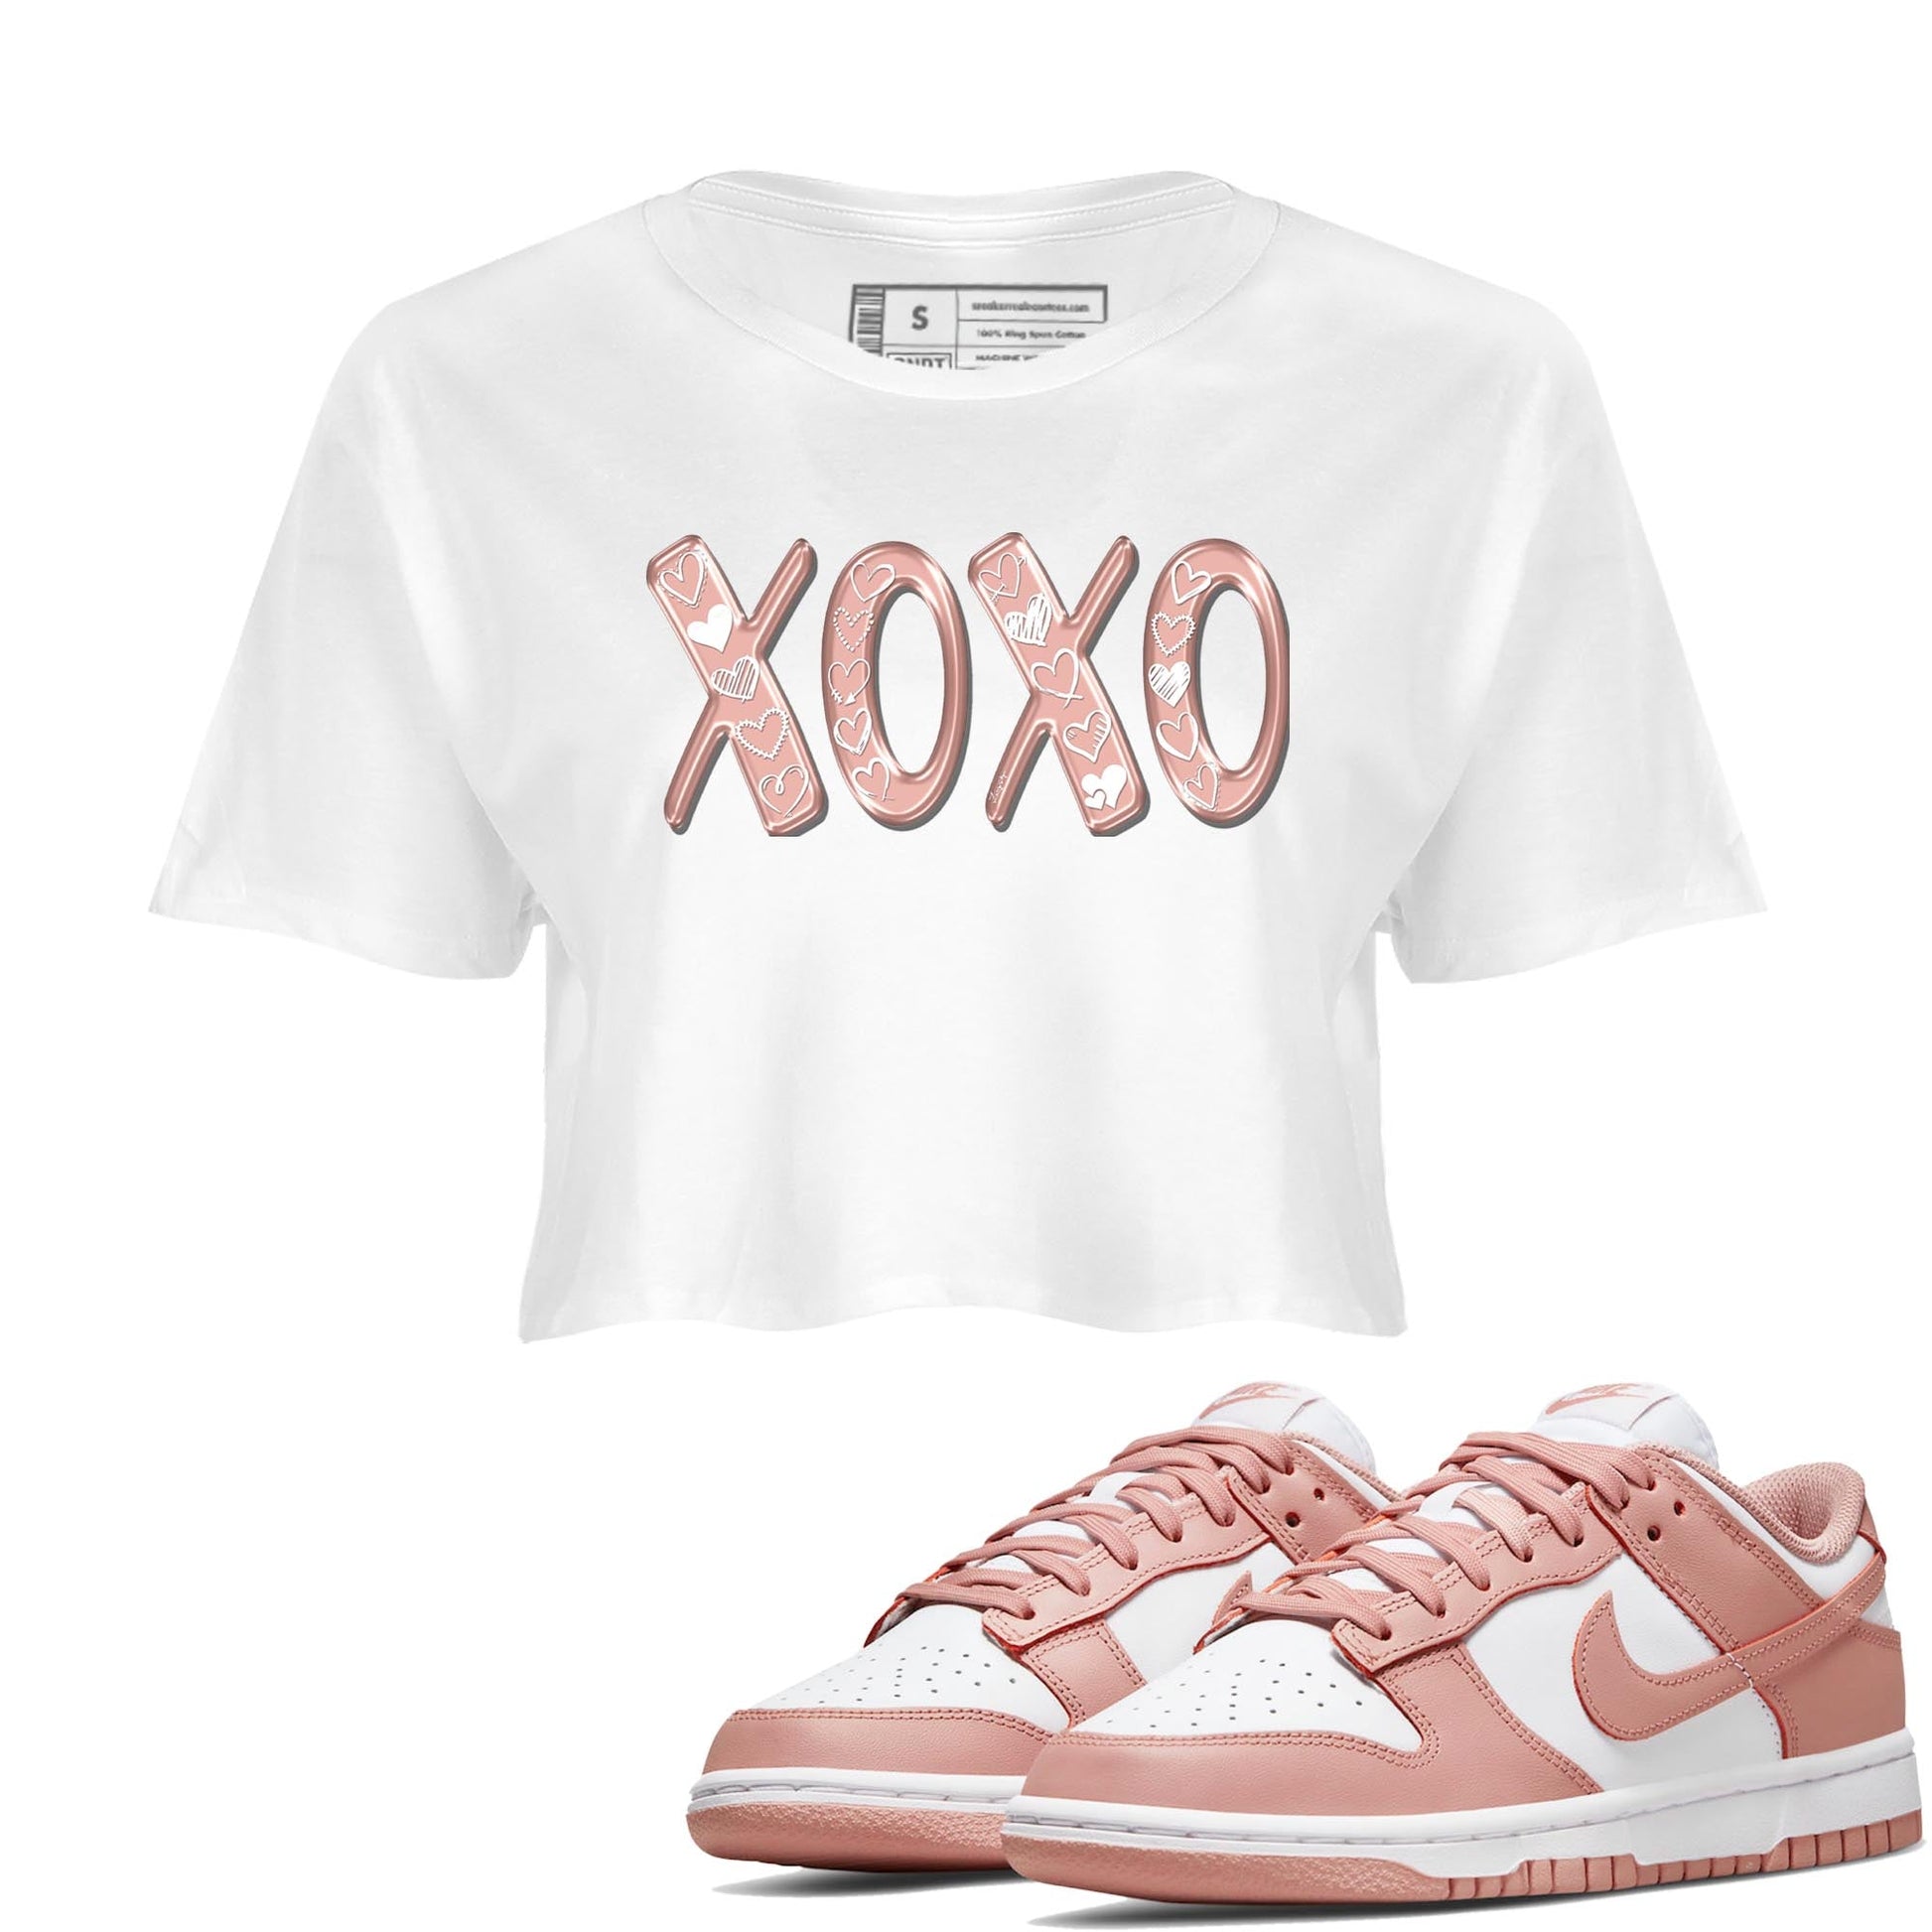 Nike Dunks Low Rose Whisper shirt to match jordans XOXO Streetwear Sneaker Shirt Nike Dunk Rose Whisper Drip Gear Zone Sneaker Matching Clothing White 1 Crop T-Shirt